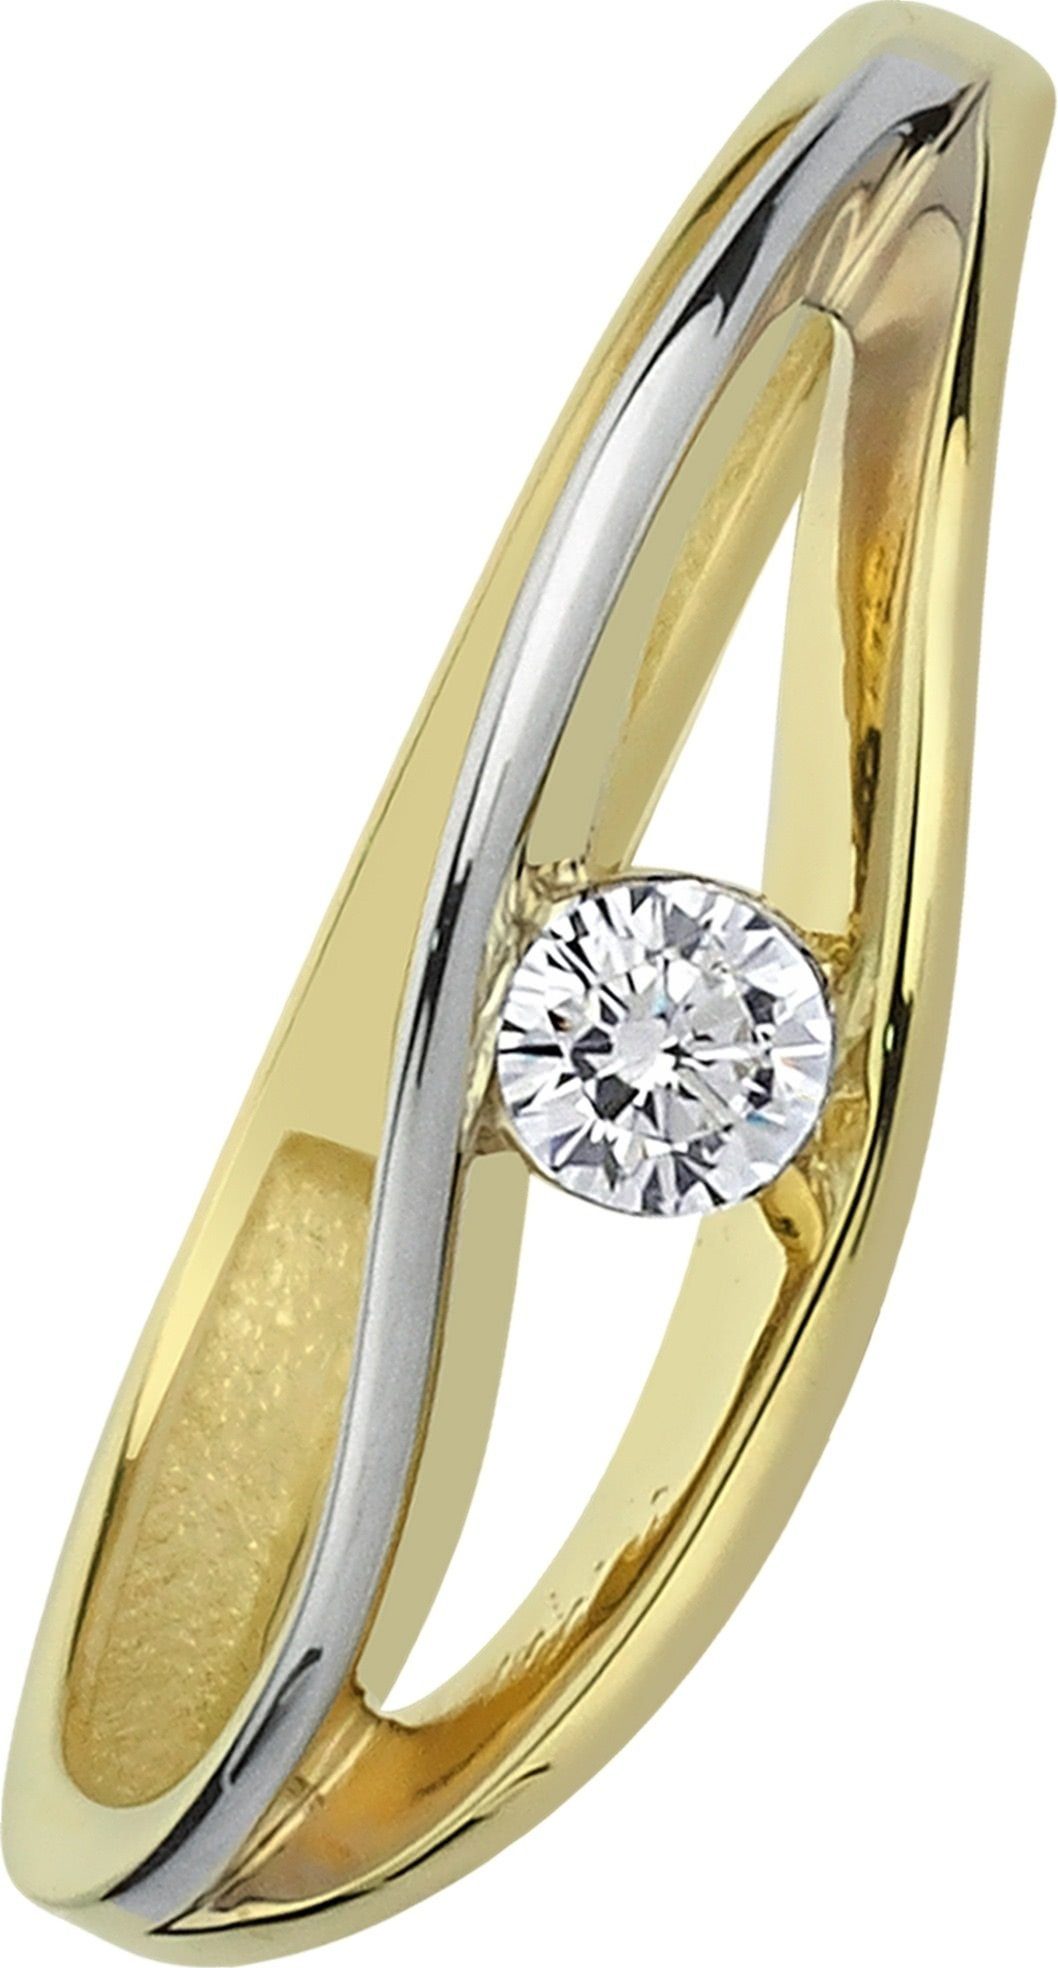 Balia Goldring Balia Damen Ring Gelbgold 8Karat Gr.54 (Fingerring), Damen Ring geschwungen aus 333 Gelbgold - 8 Karat, Farbe: weiß, gold